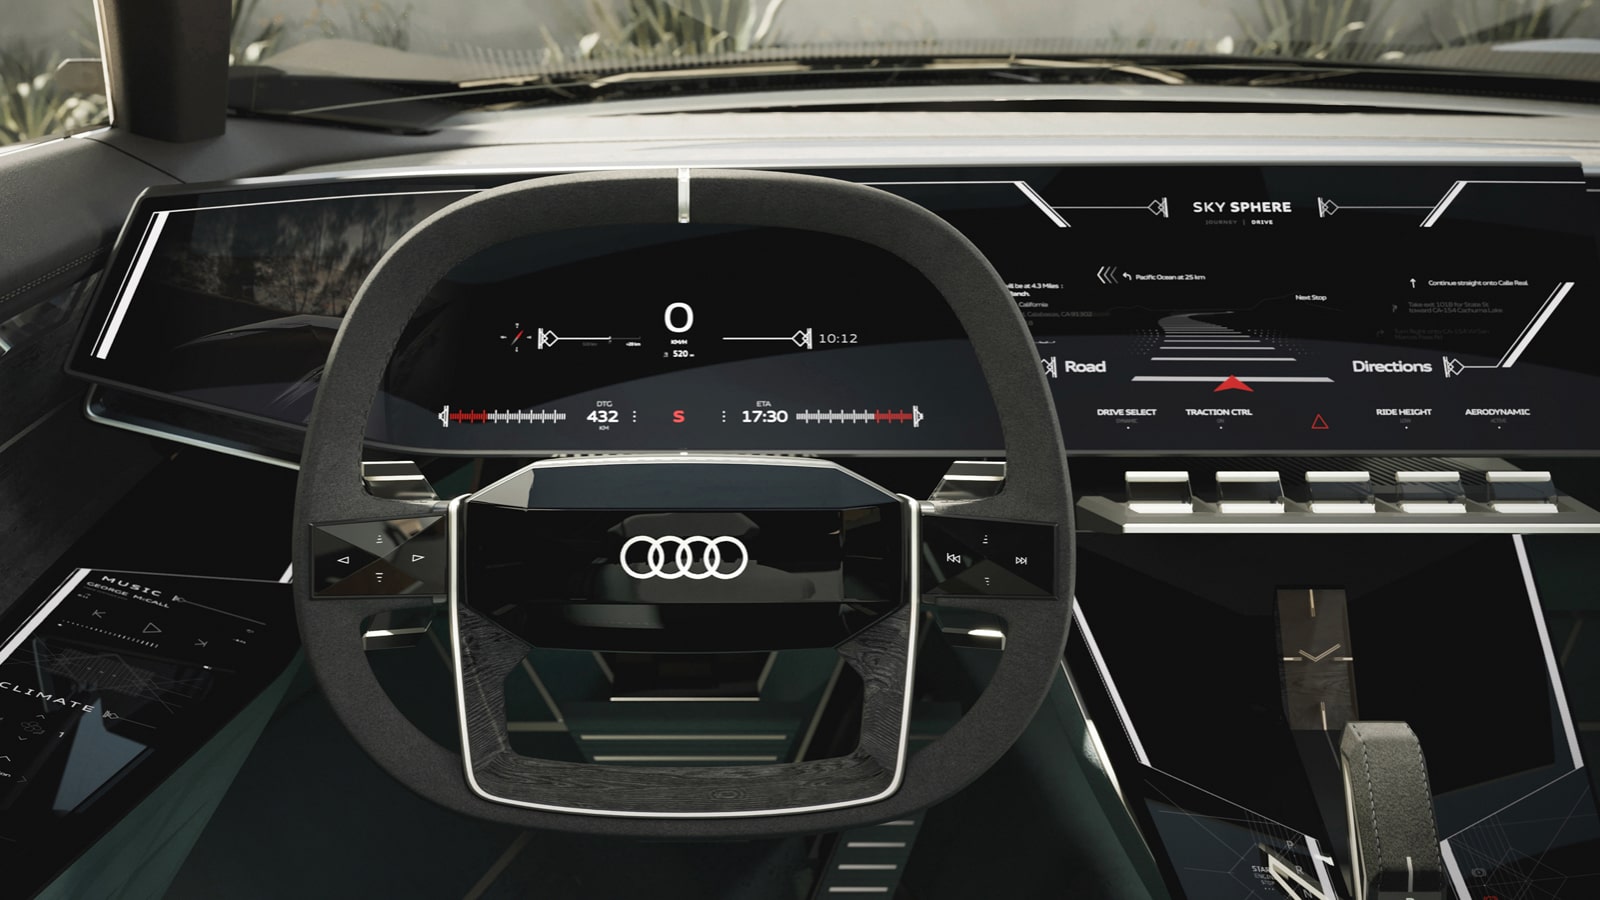 Audi Sky Sphere Interior dashboard